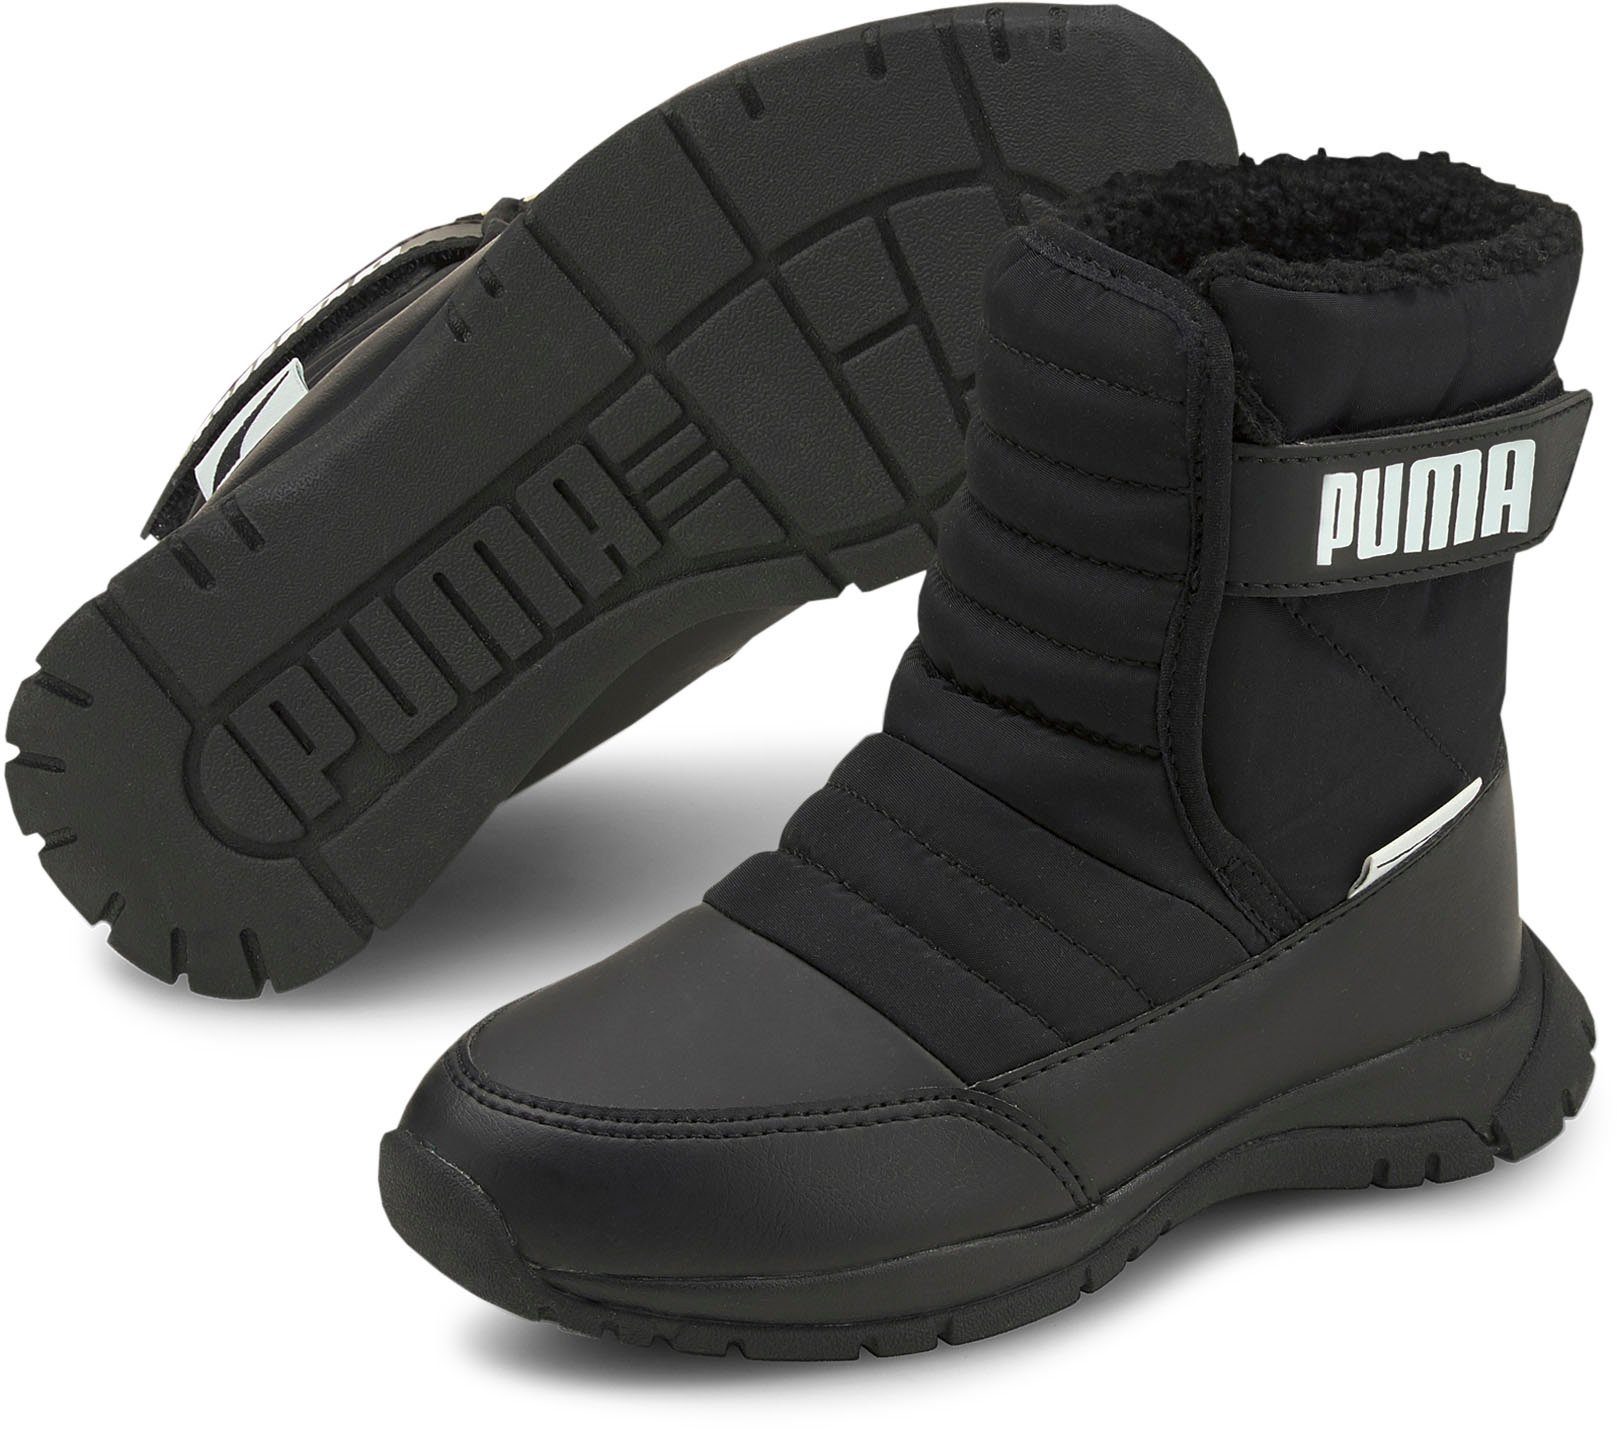 PUMA »Puma Nieve Boot WTR AC PS« Winterboots | OTTO